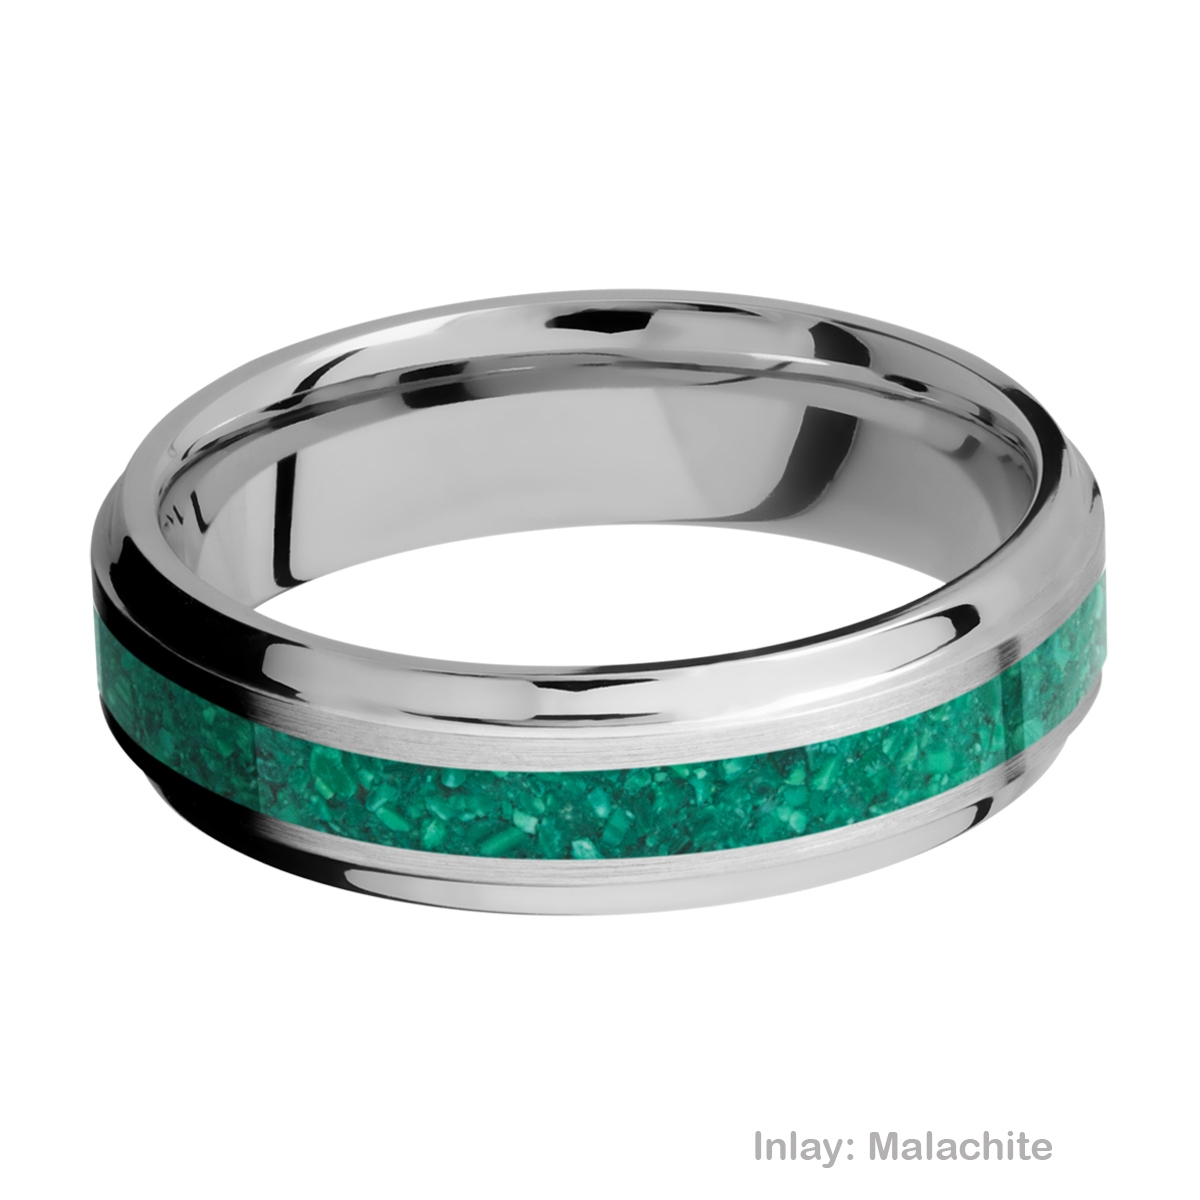 Lashbrook CC6B13(S)/MOSAIC Cobalt Chrome Wedding Ring or Band